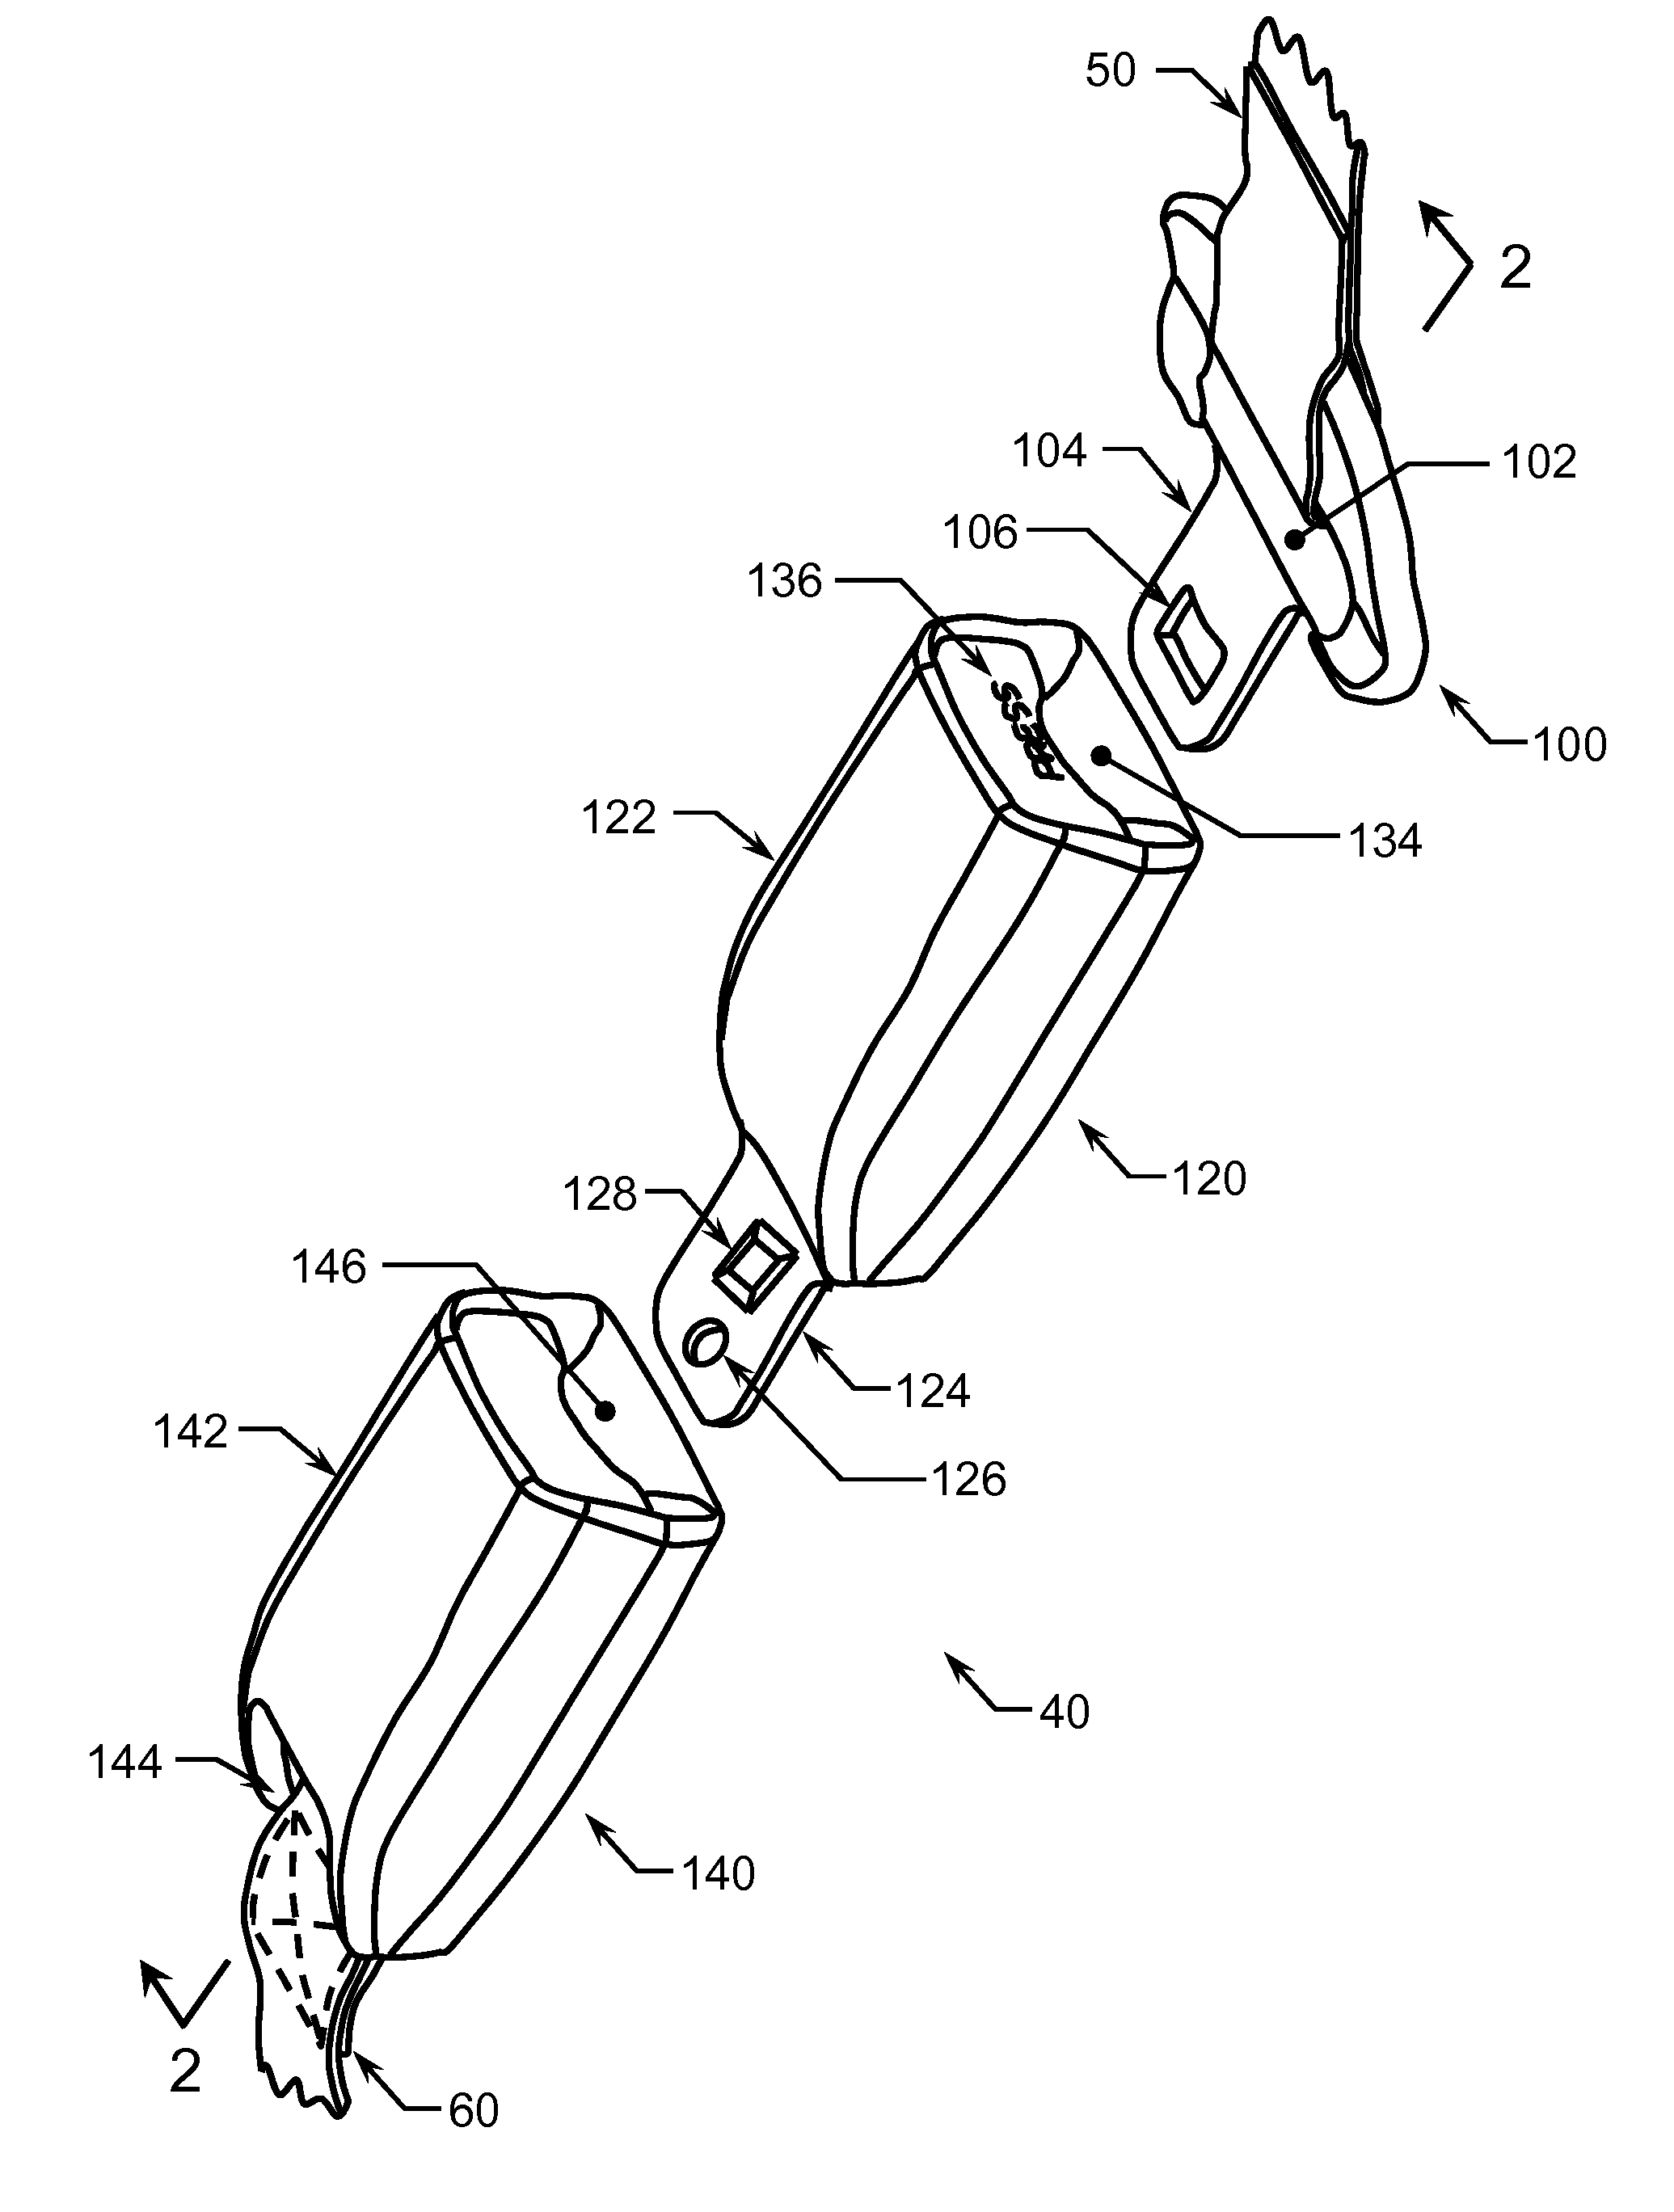 Adaptive Seatbelt Apparatus